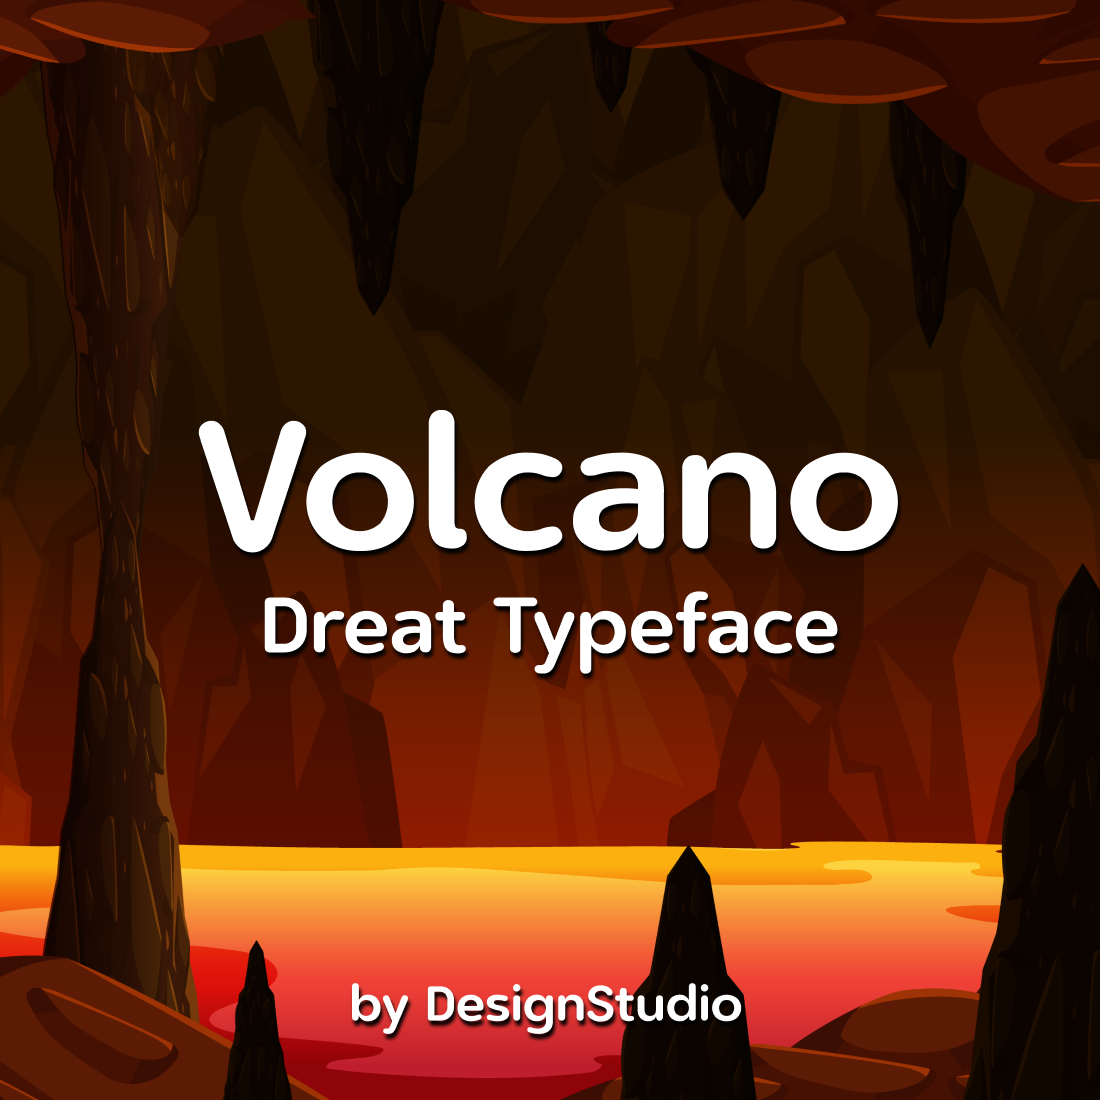 Volcano Monospaced Sans Serif Font cover image.